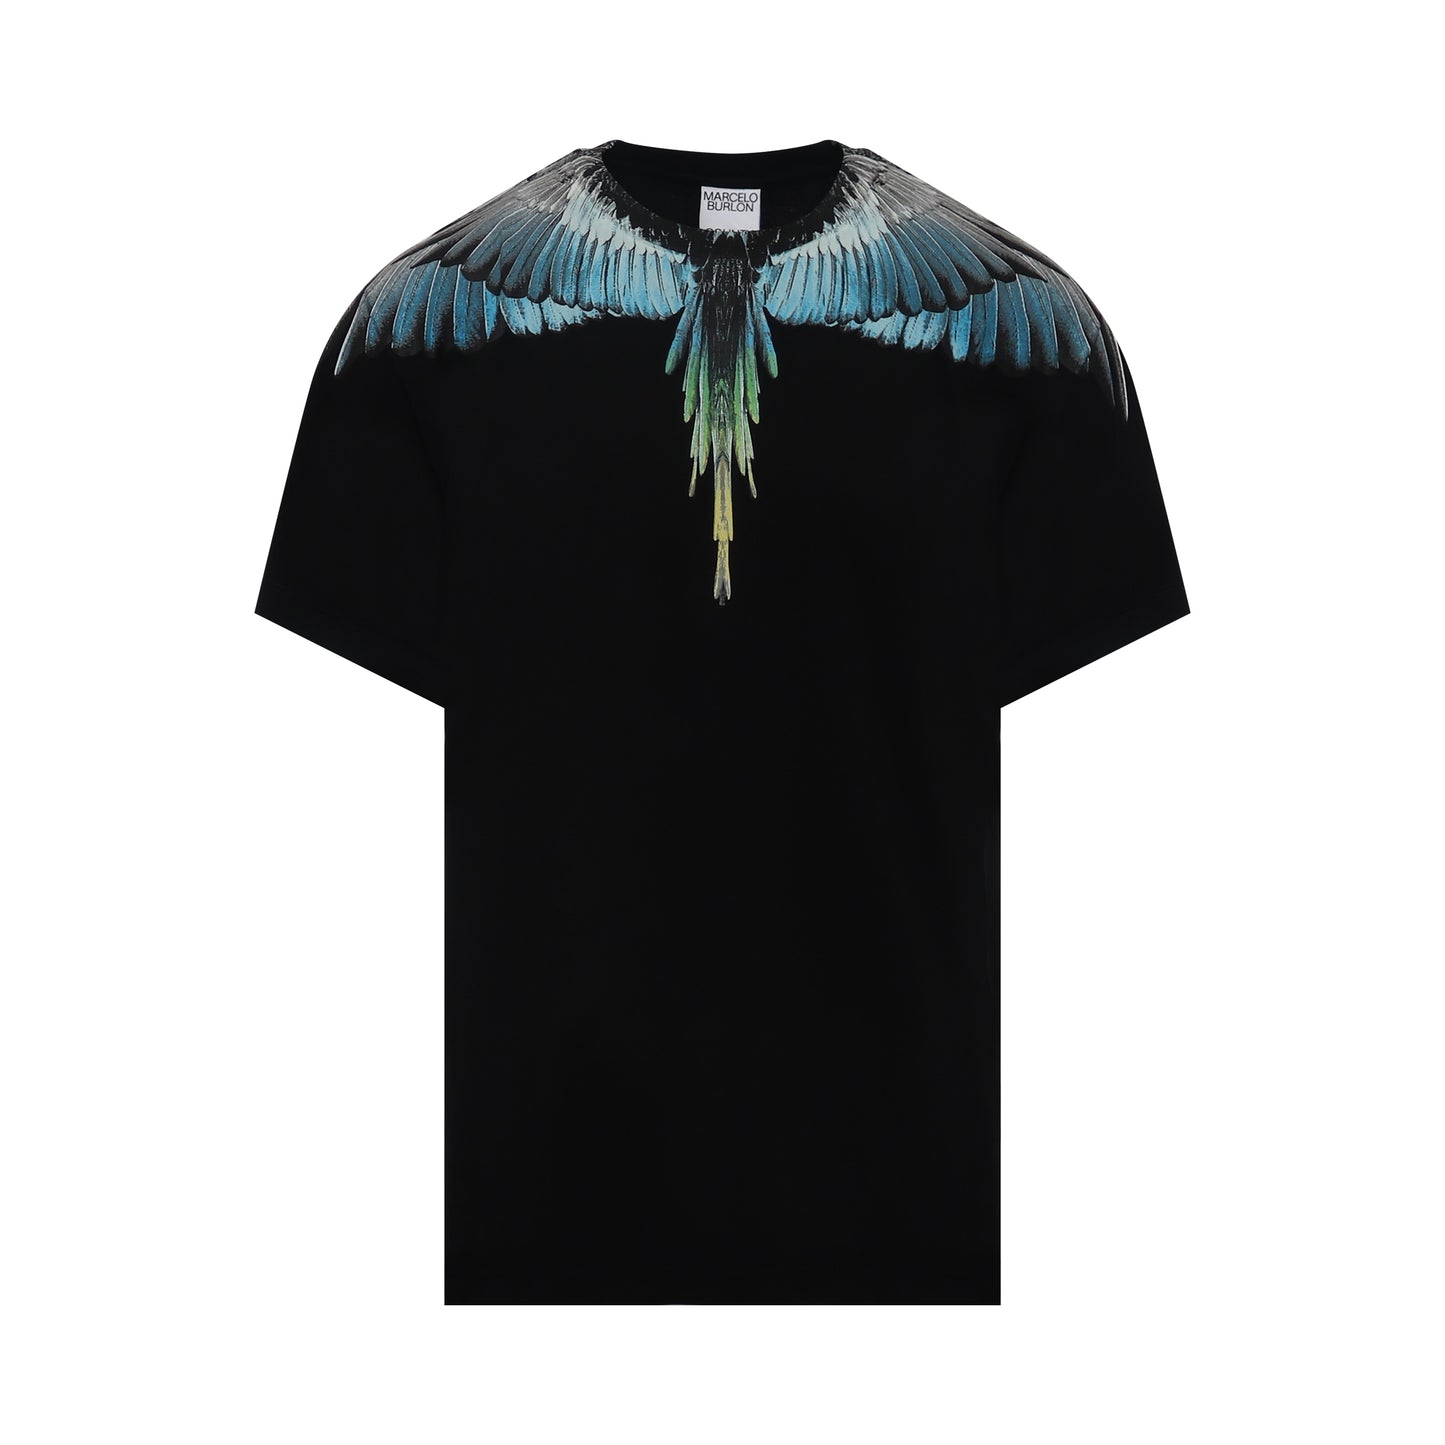 Classic Wings Print T-Shirt in Black/Blue